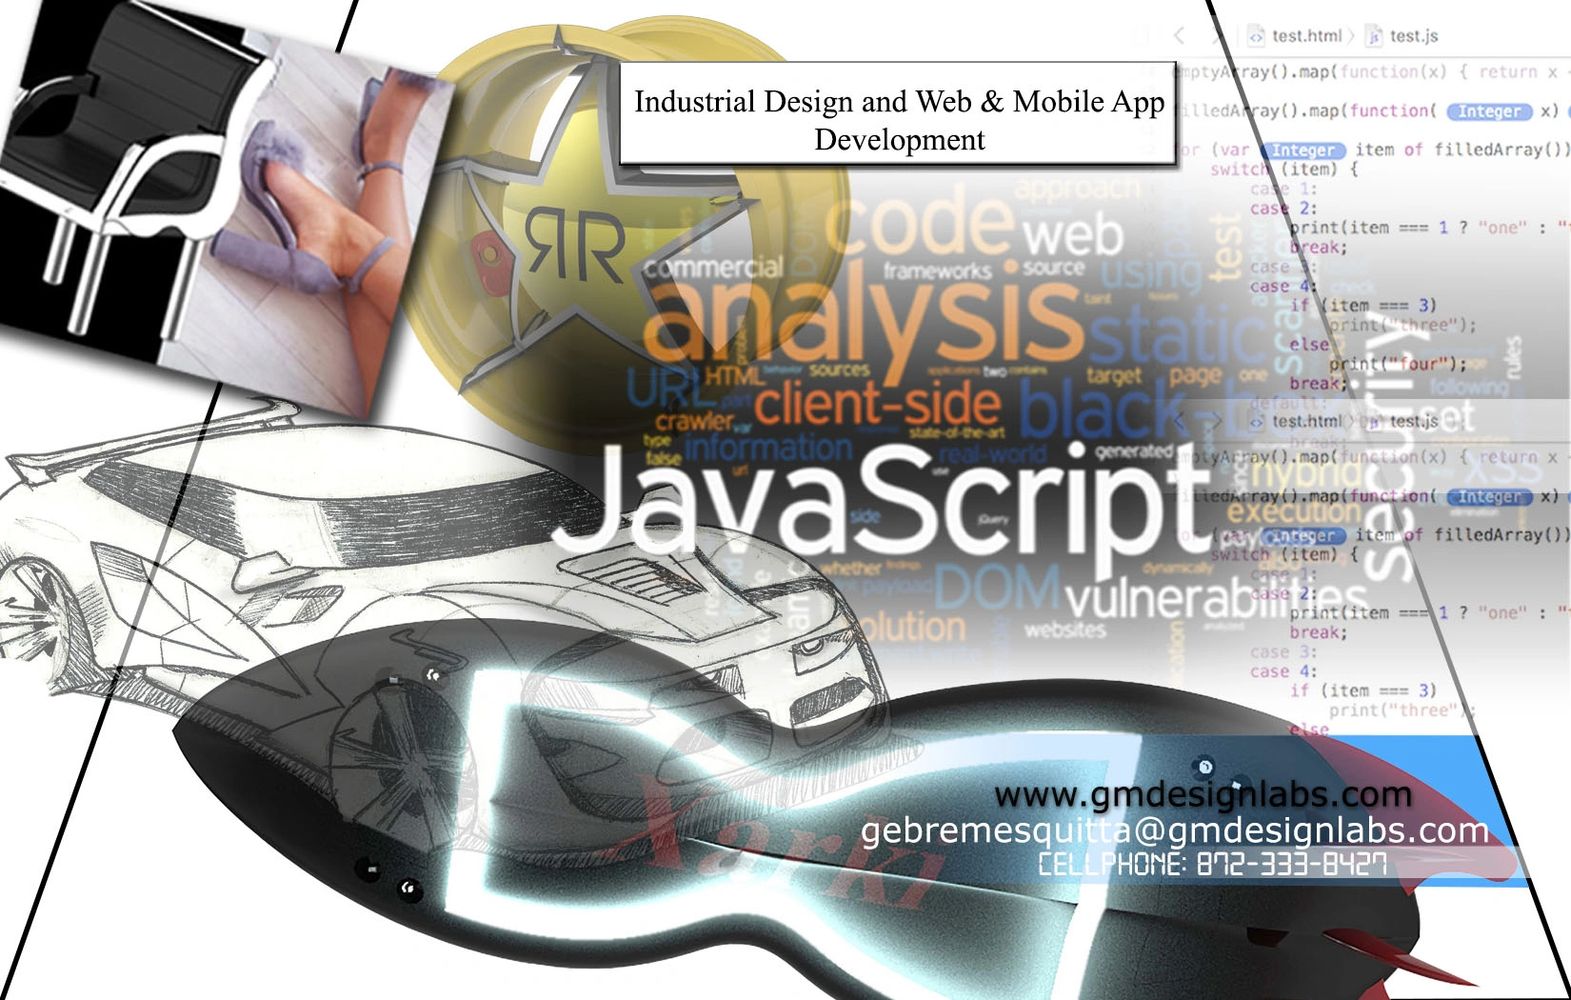 Web/Mobile App Development  and Industrial design